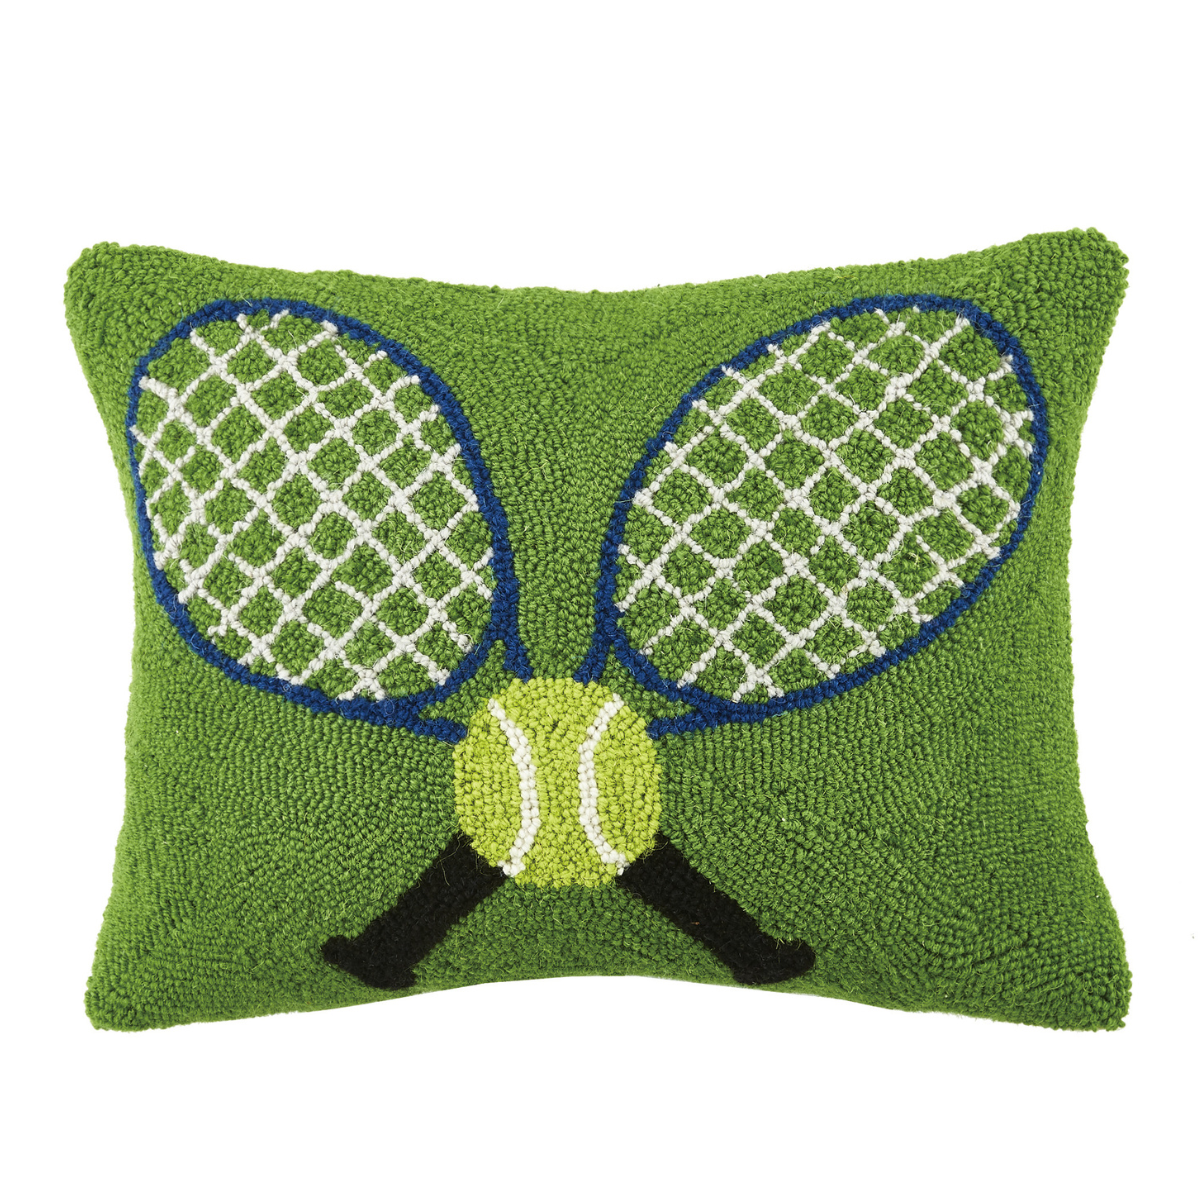 Crossed Tennis Rackets Hooked-Wool Throw Pillow